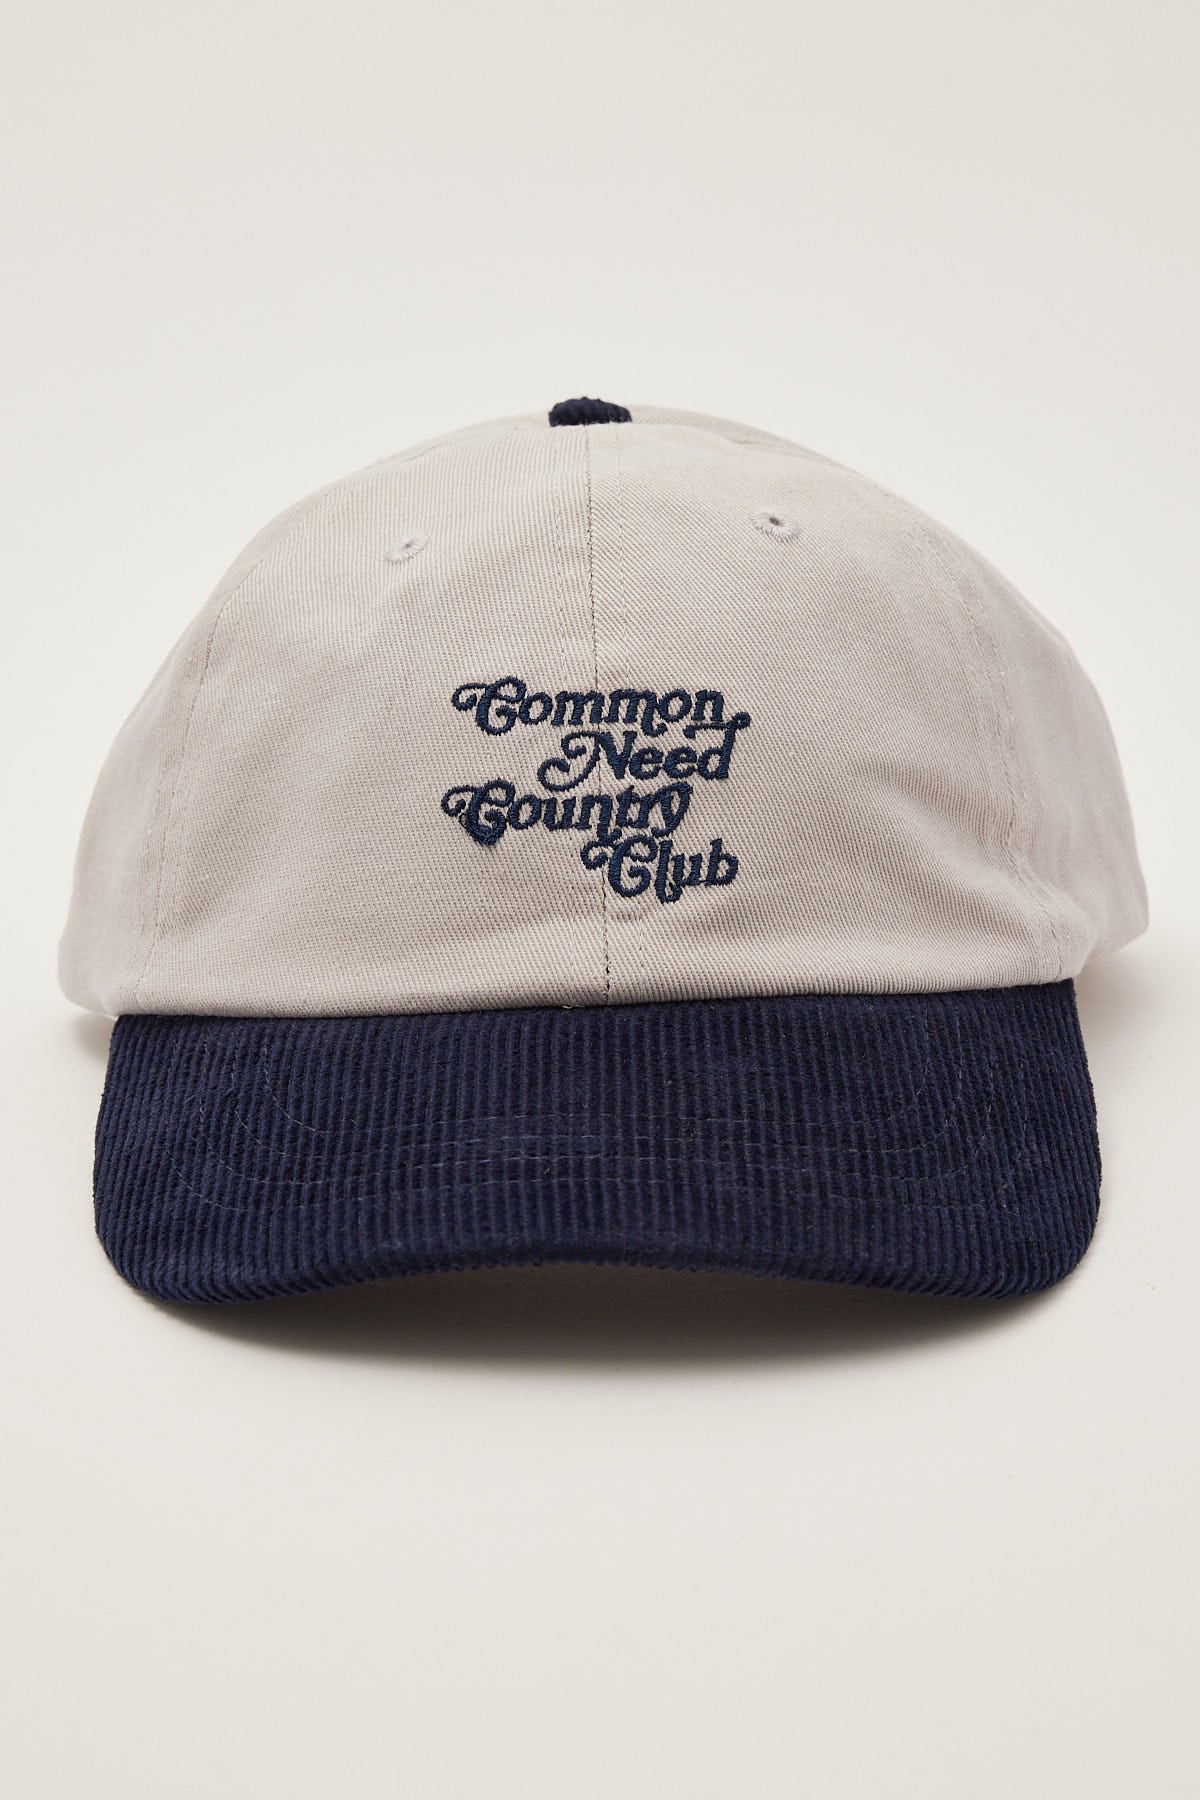 Common Need Country Club Dad Cap Grey/Navy